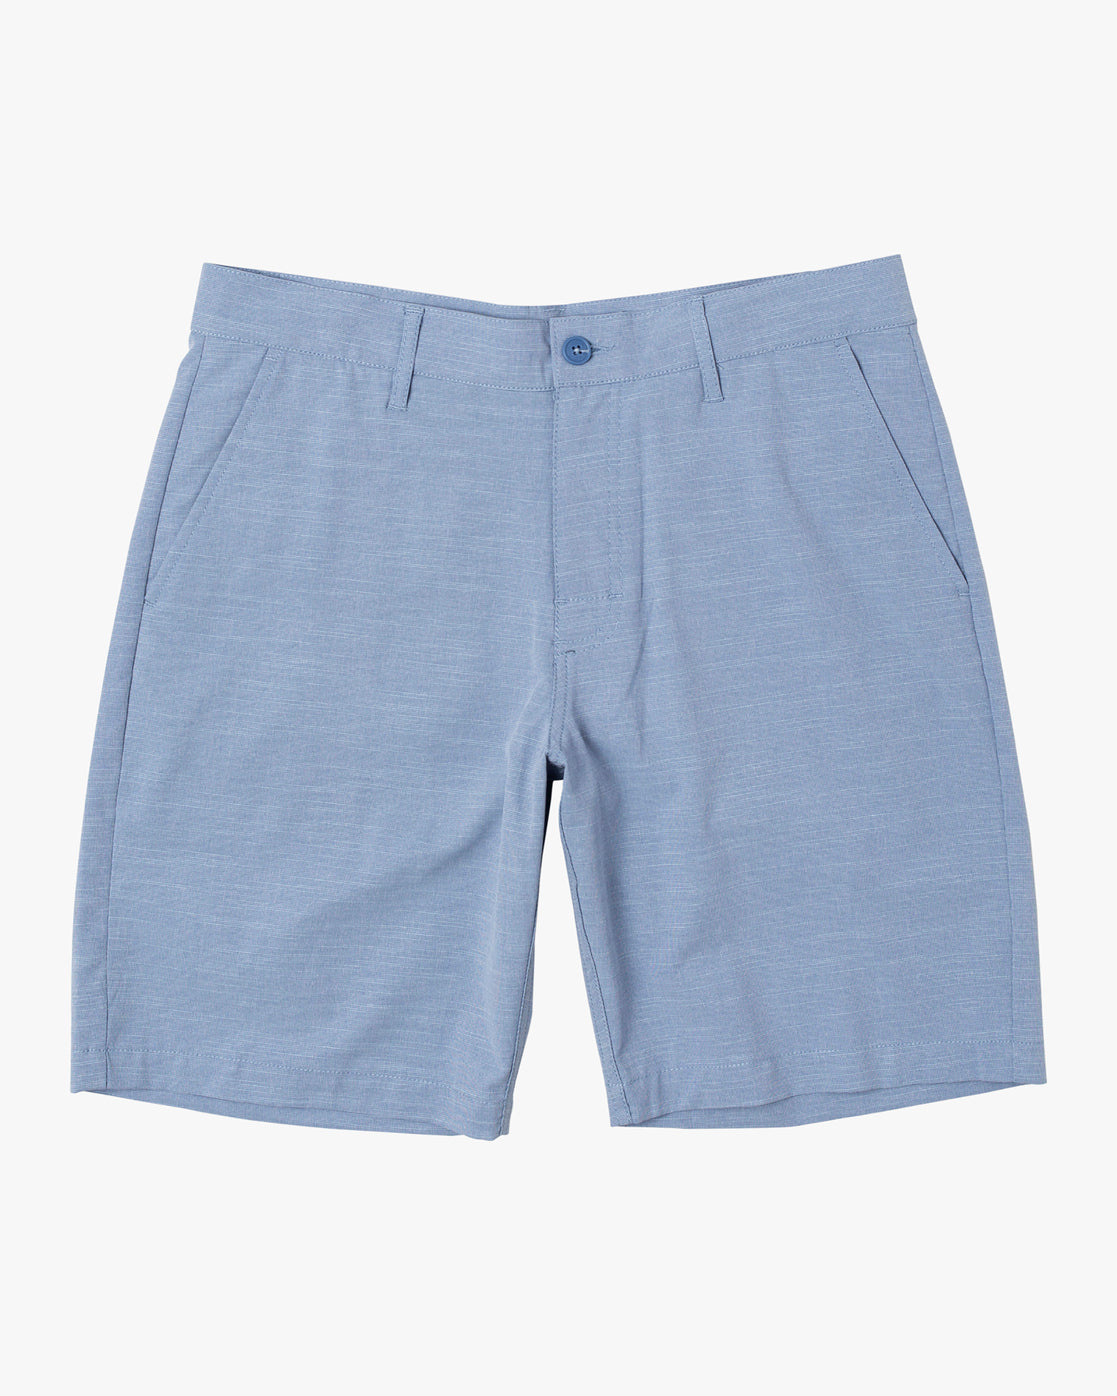 RVCA Balance Hybrid Shorts - Nautical Blue NBL Mens Shorts